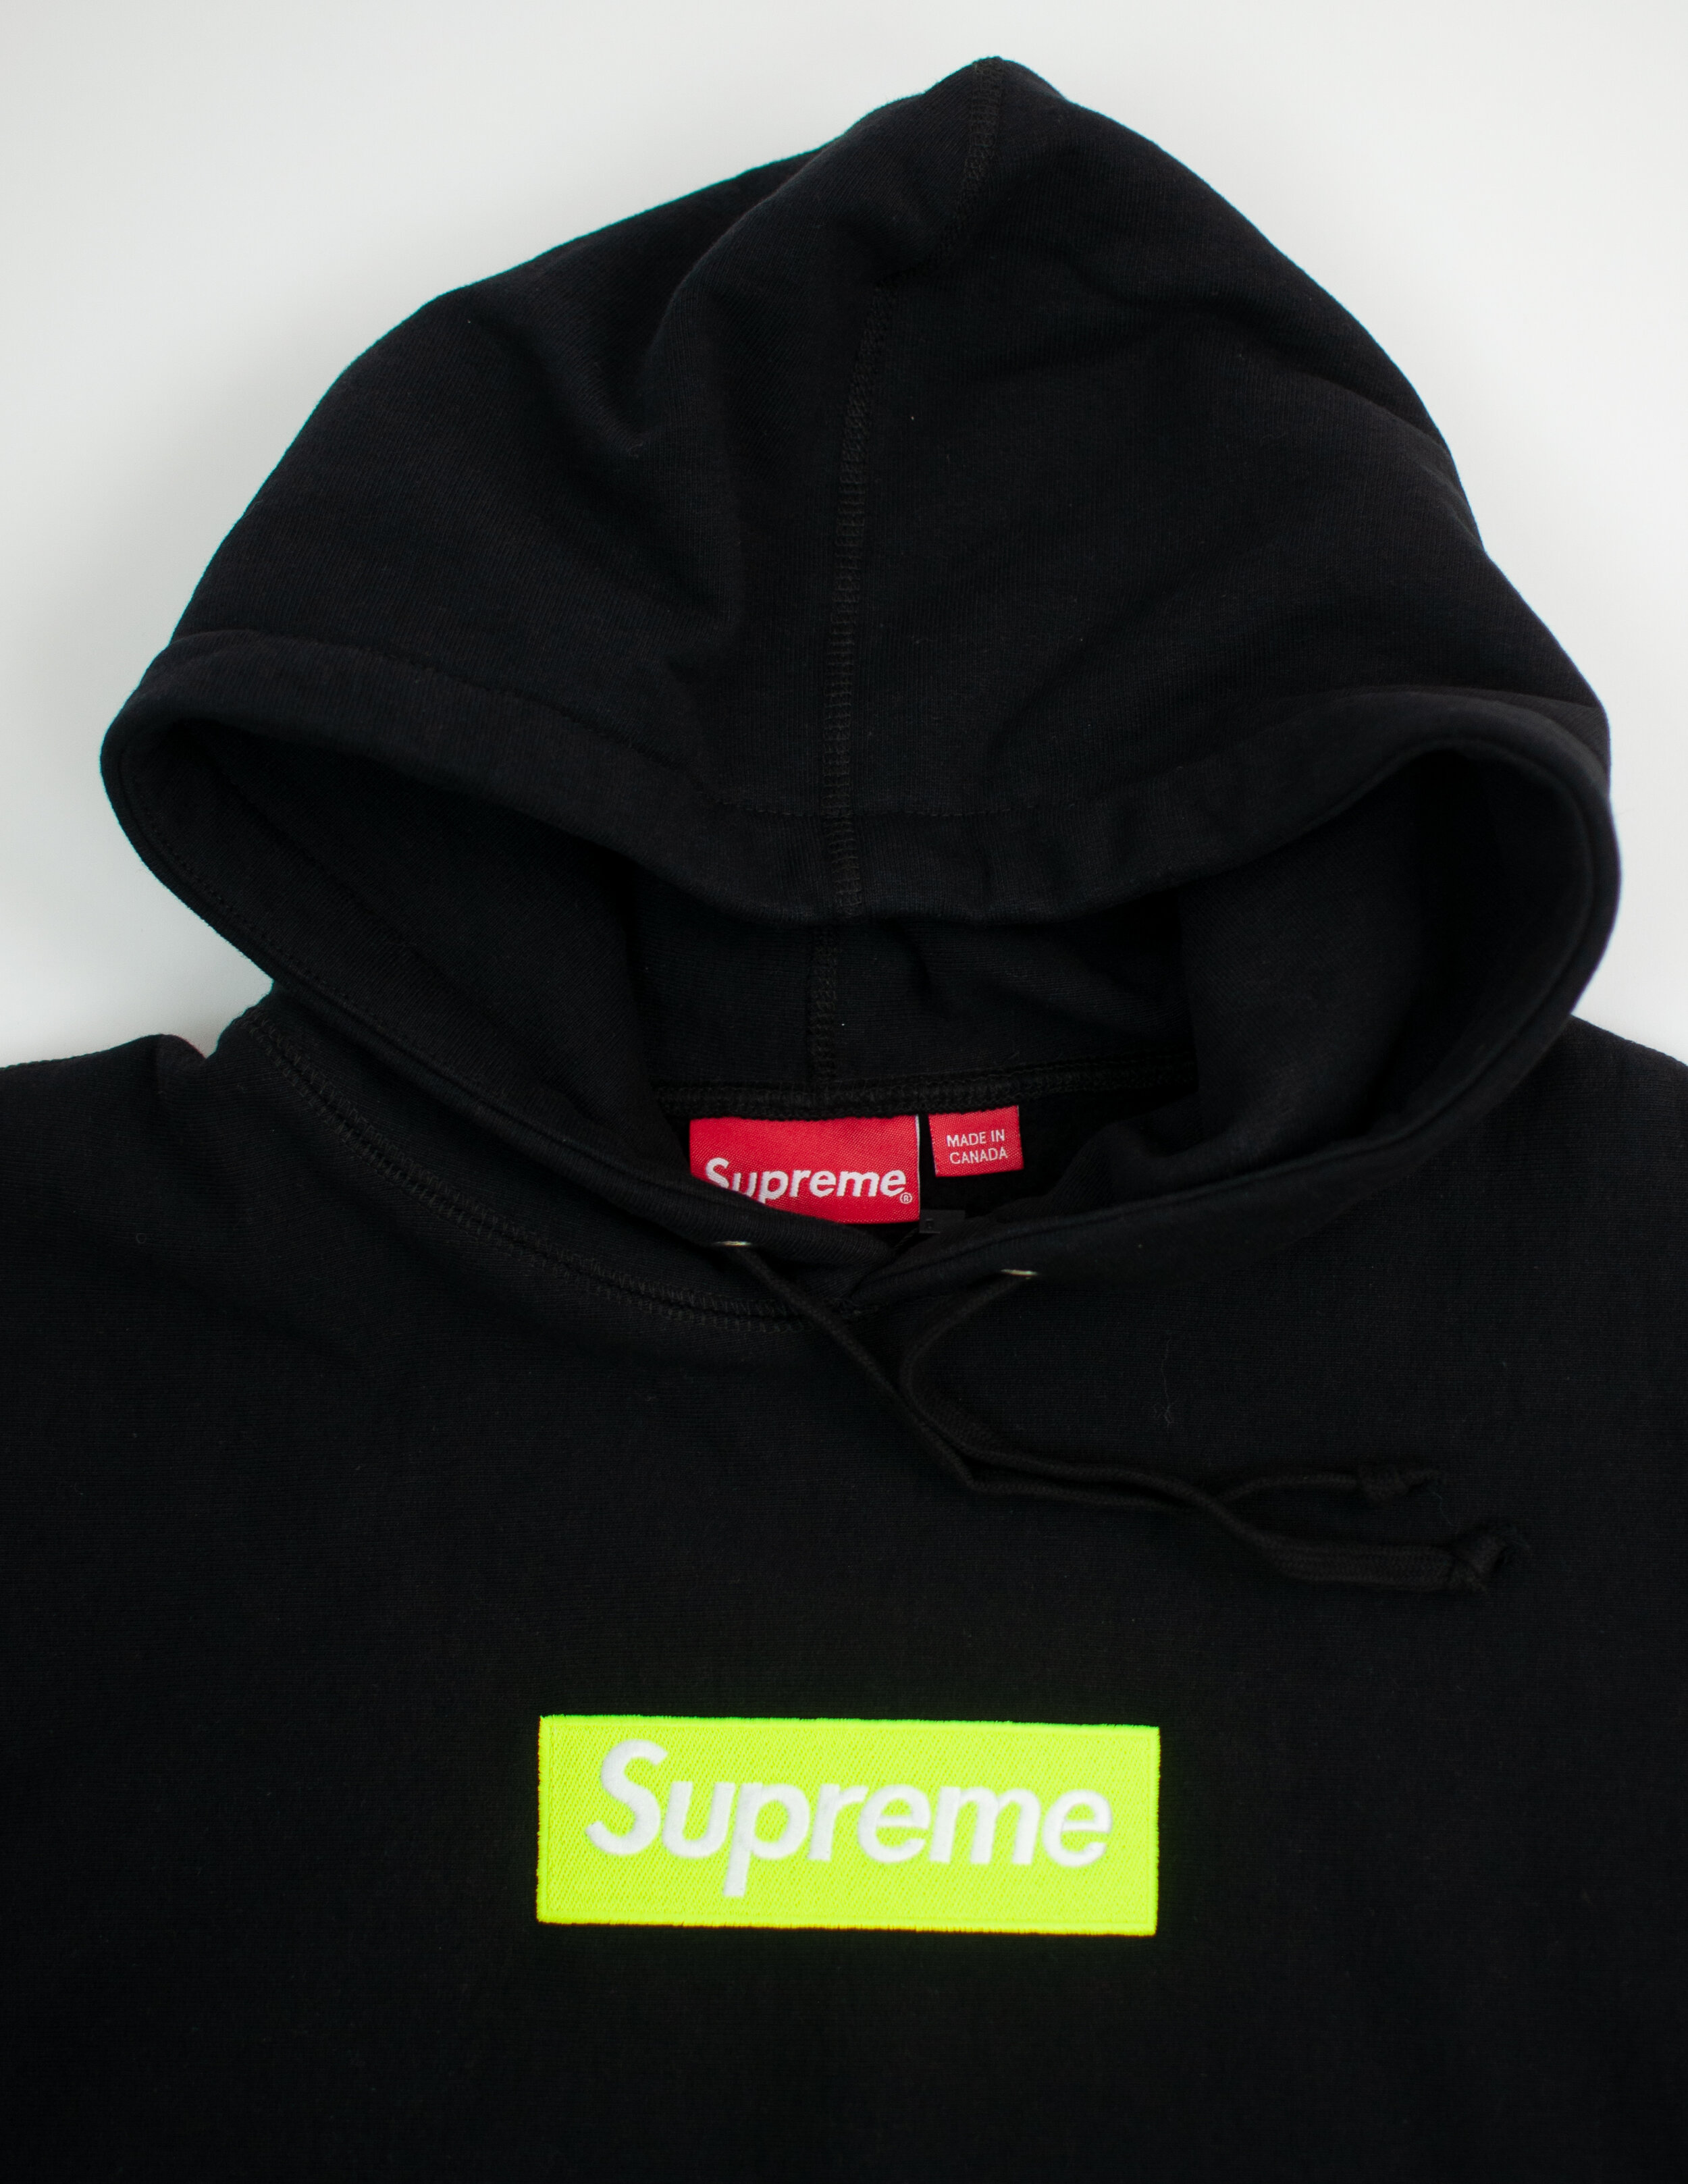 Supreme Box Logo Hooded Sweatshirt Black ceratinxd.com